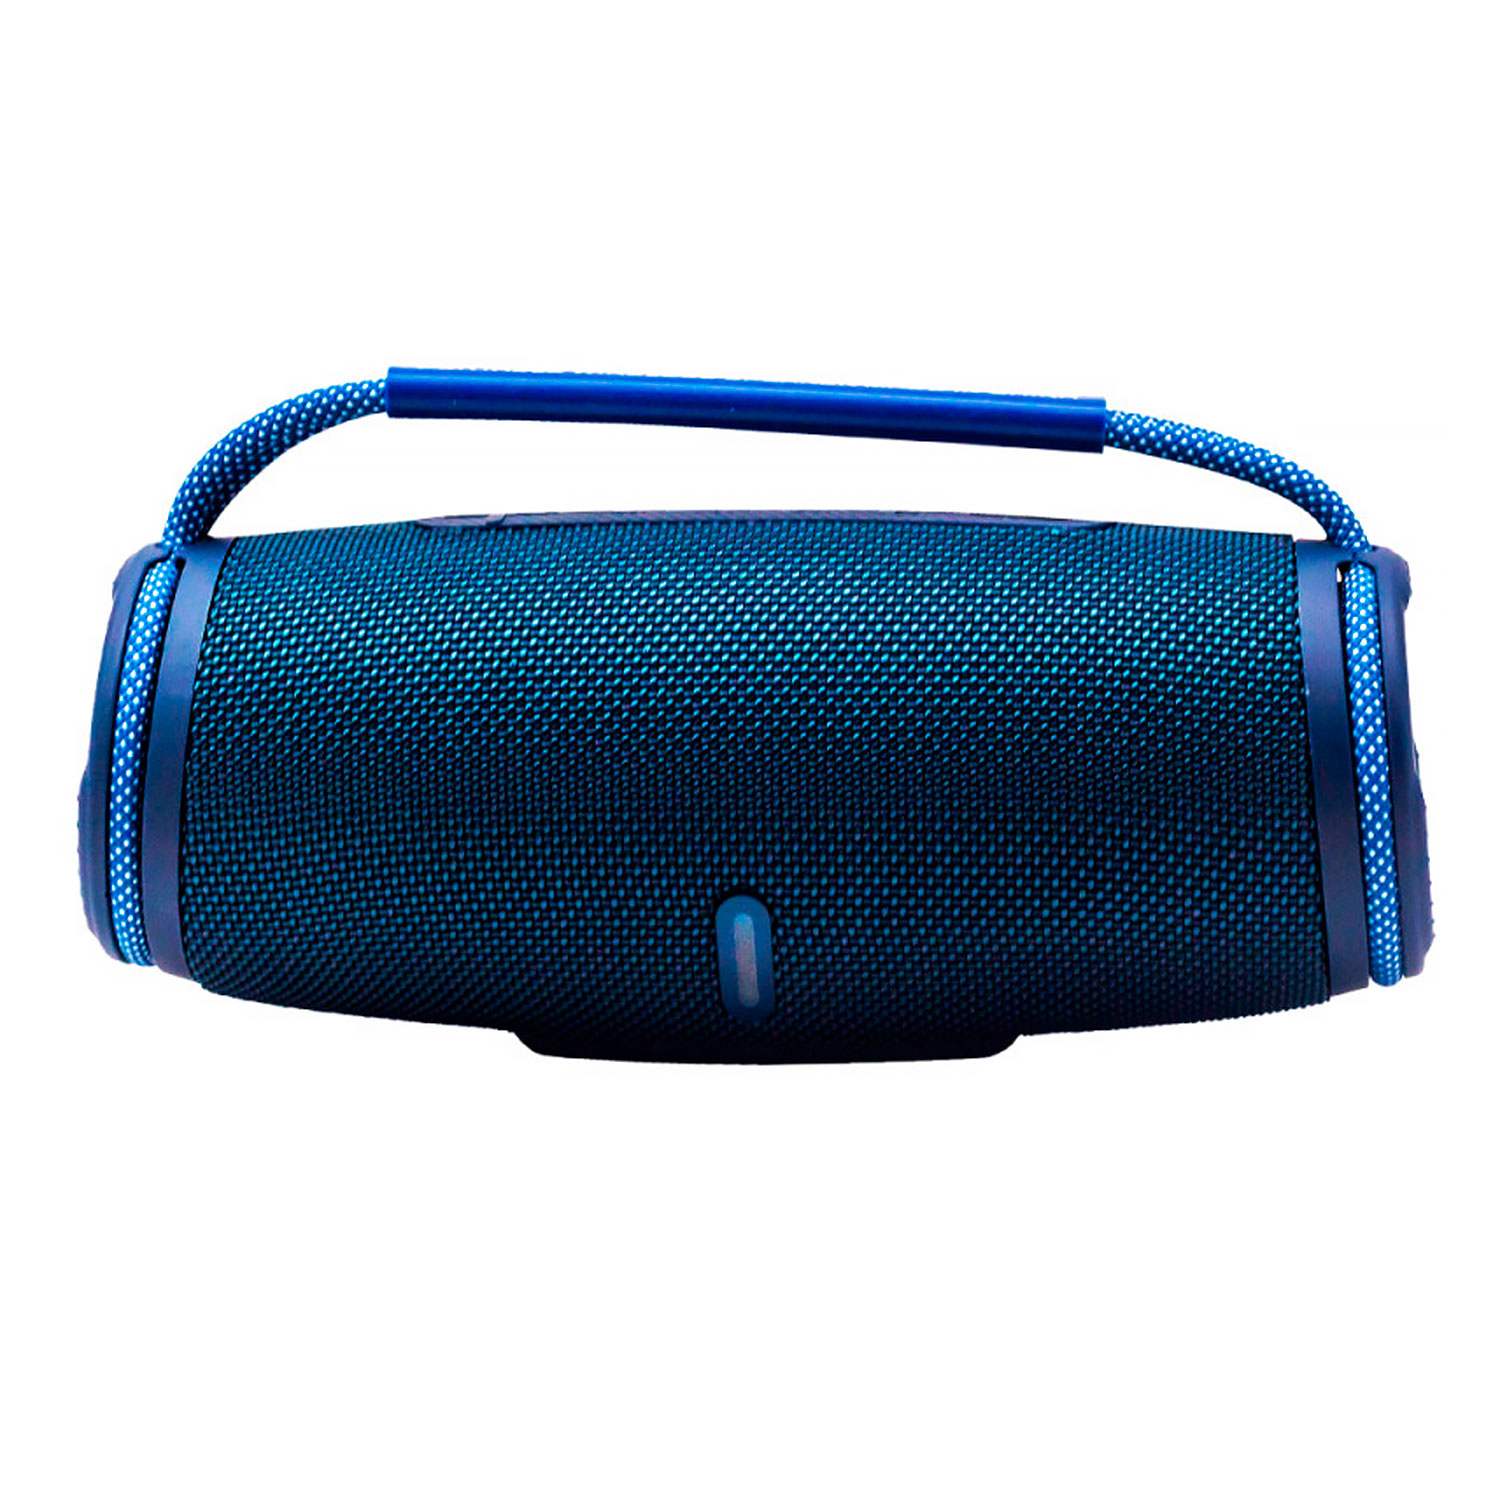 Speaker Portátil Blulory BS-J02 Bluetooth - Azul